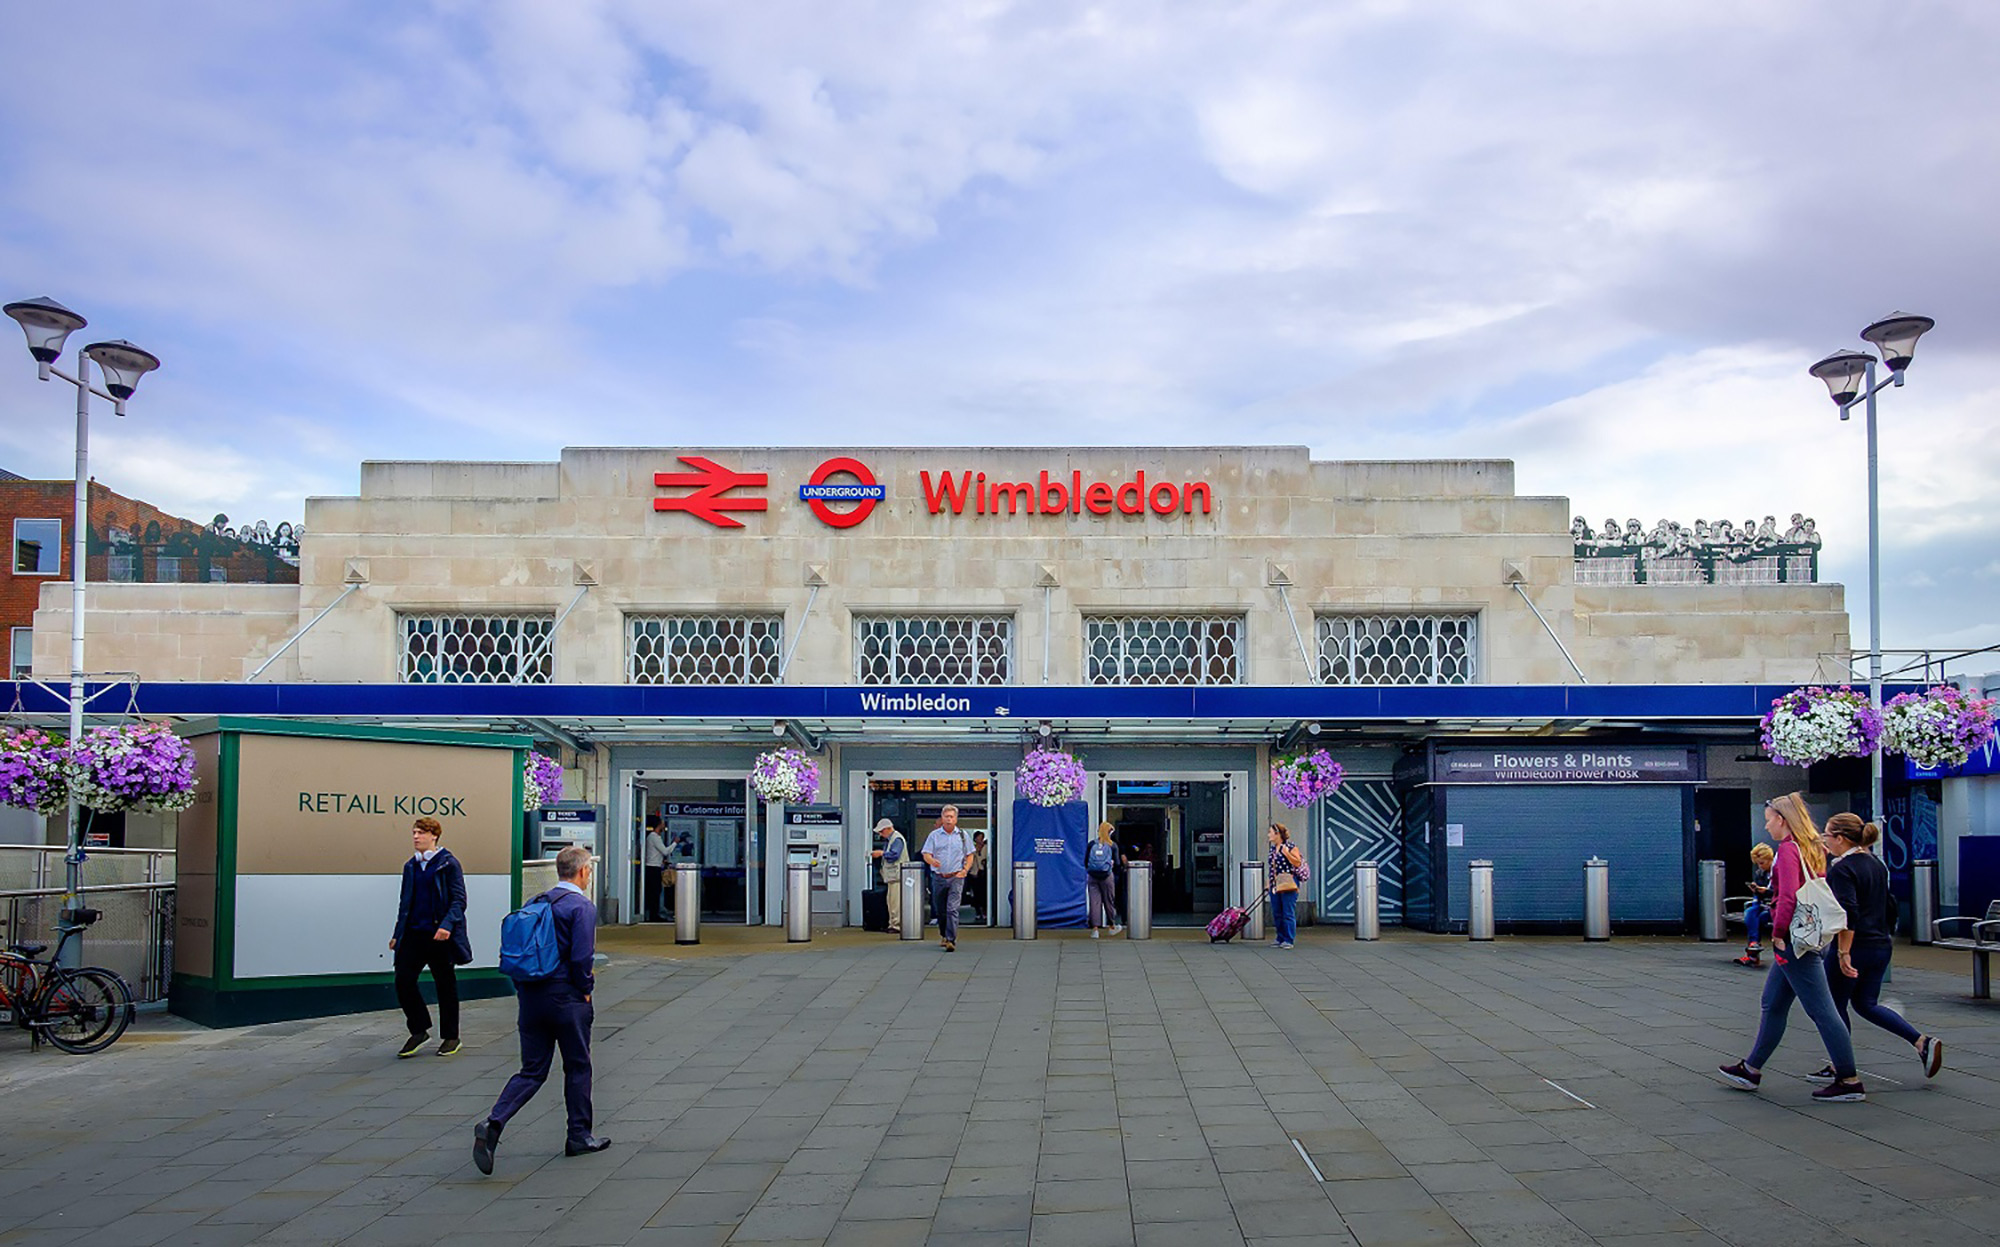 Wimbledon Underground Station